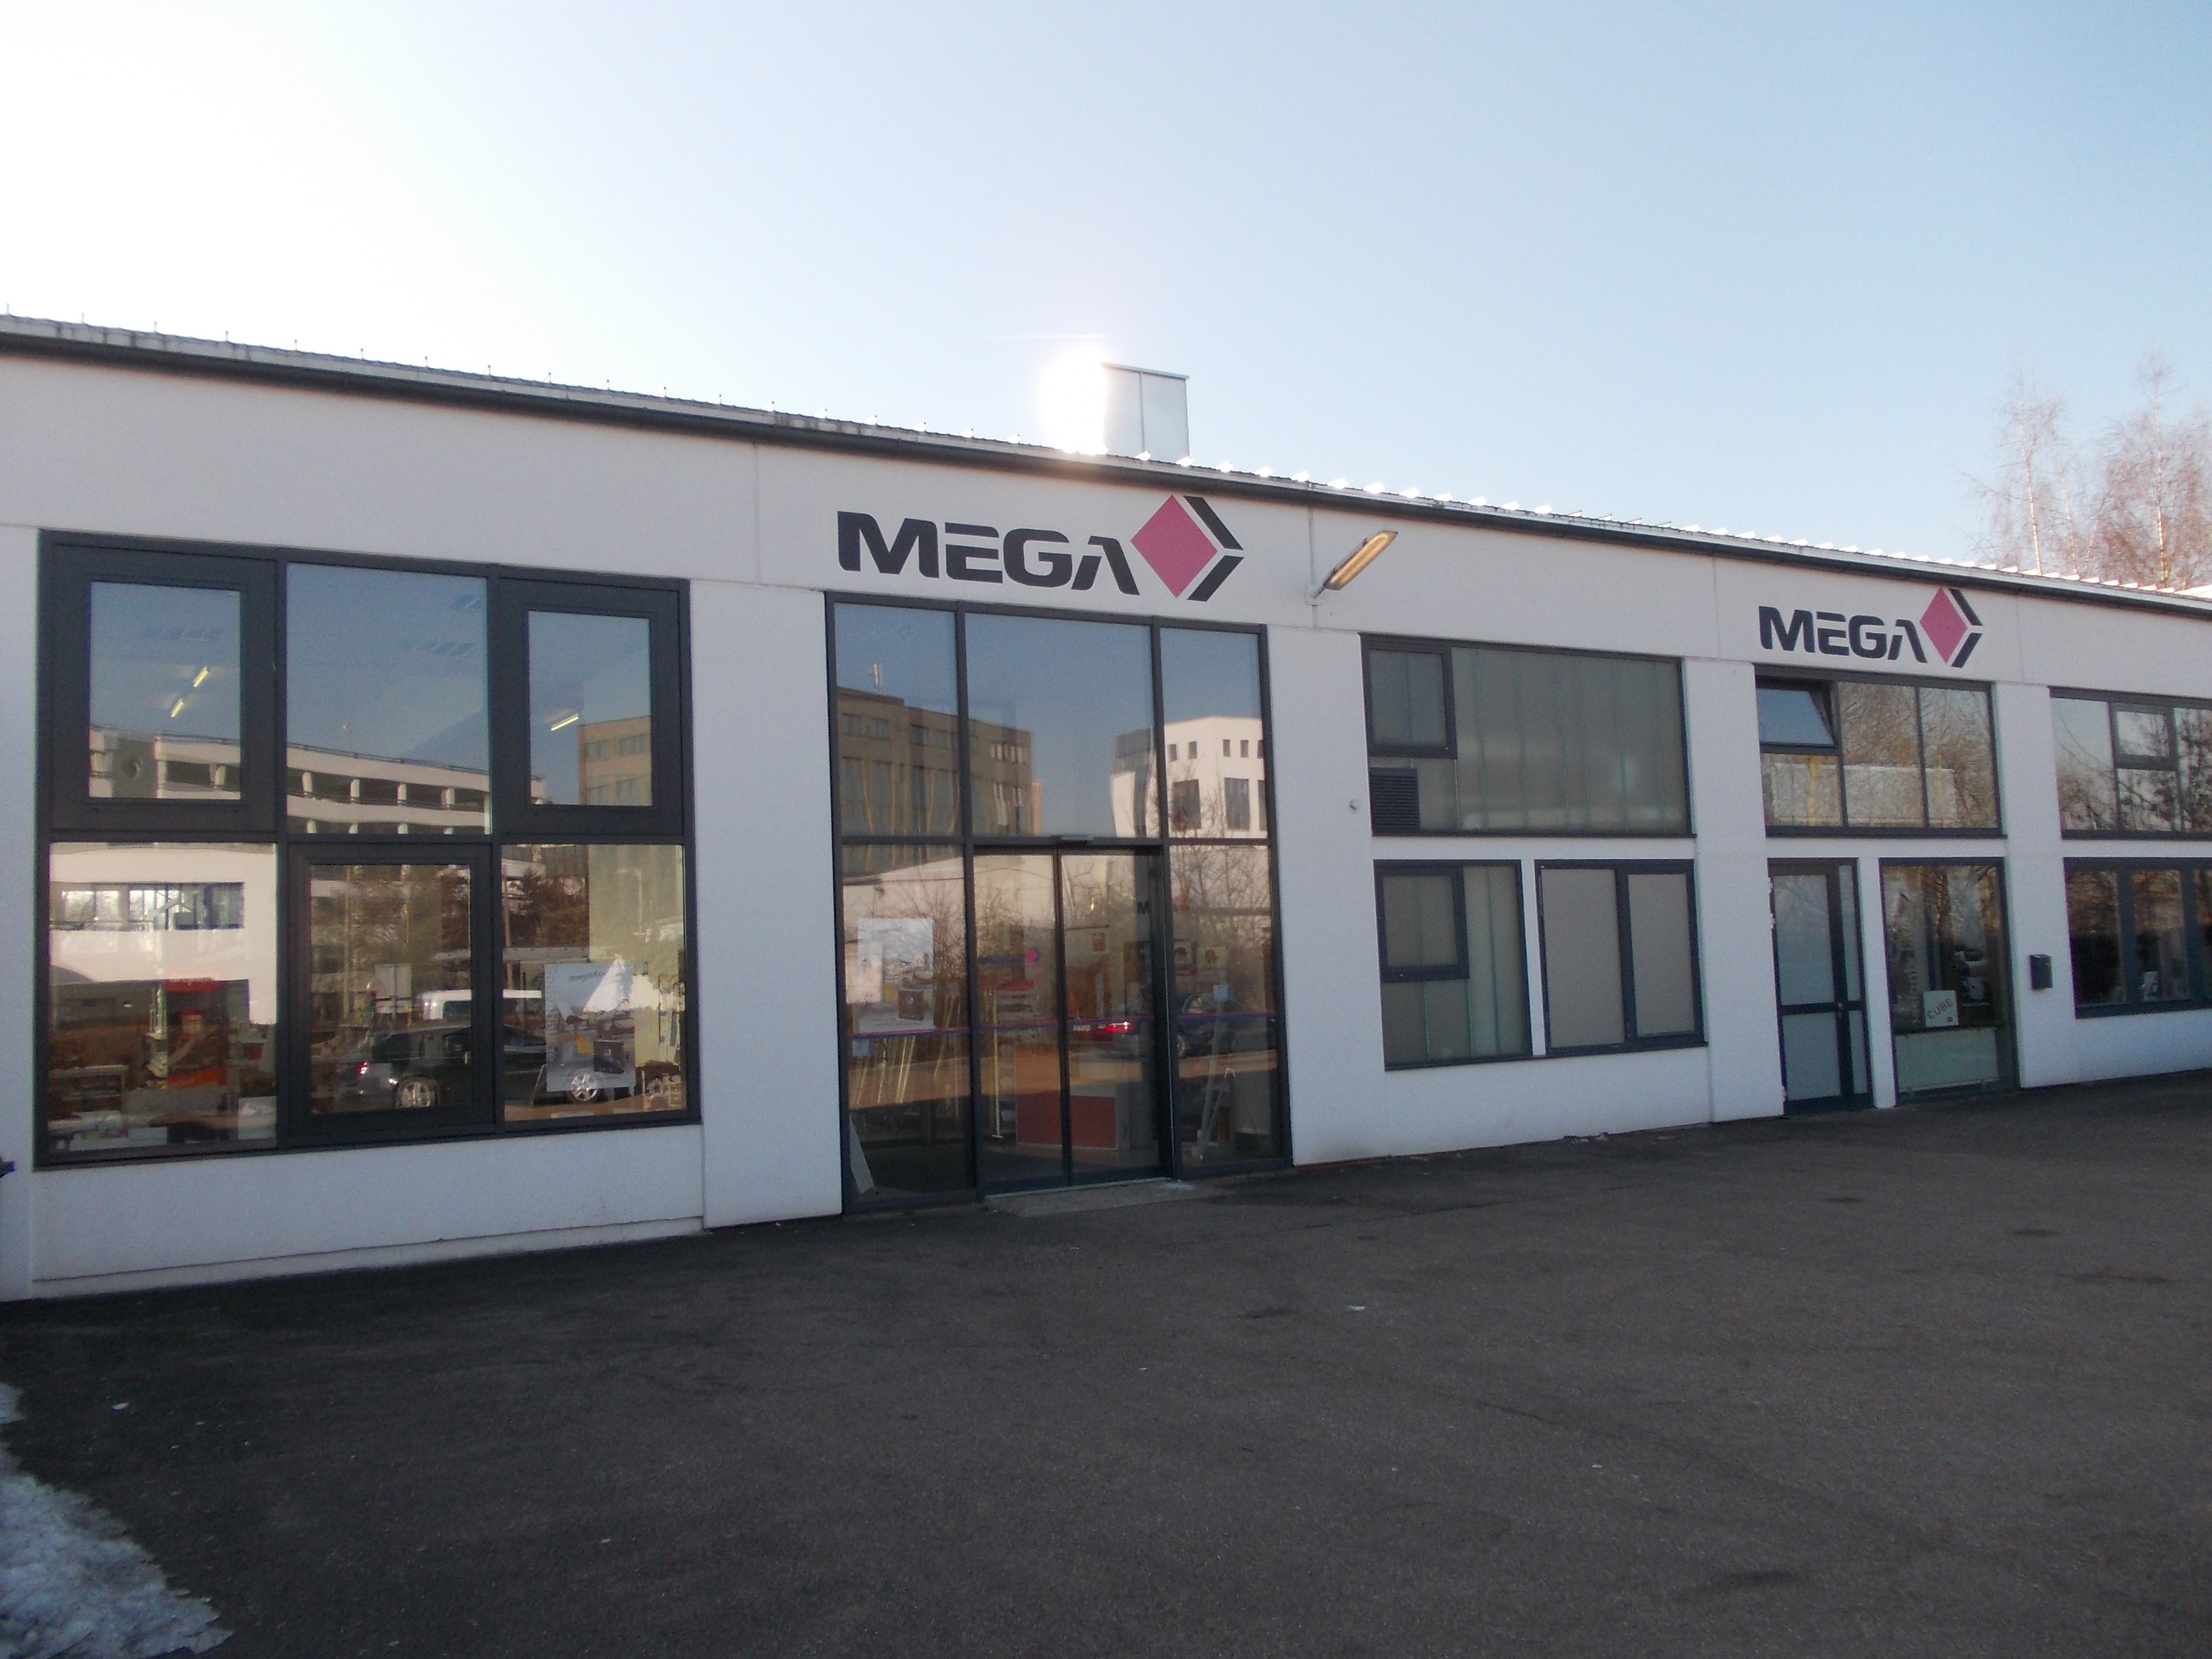 Standortbild MEGA eG Regensburg, Großhandel für Maler, Bodenleger und Stuckateure